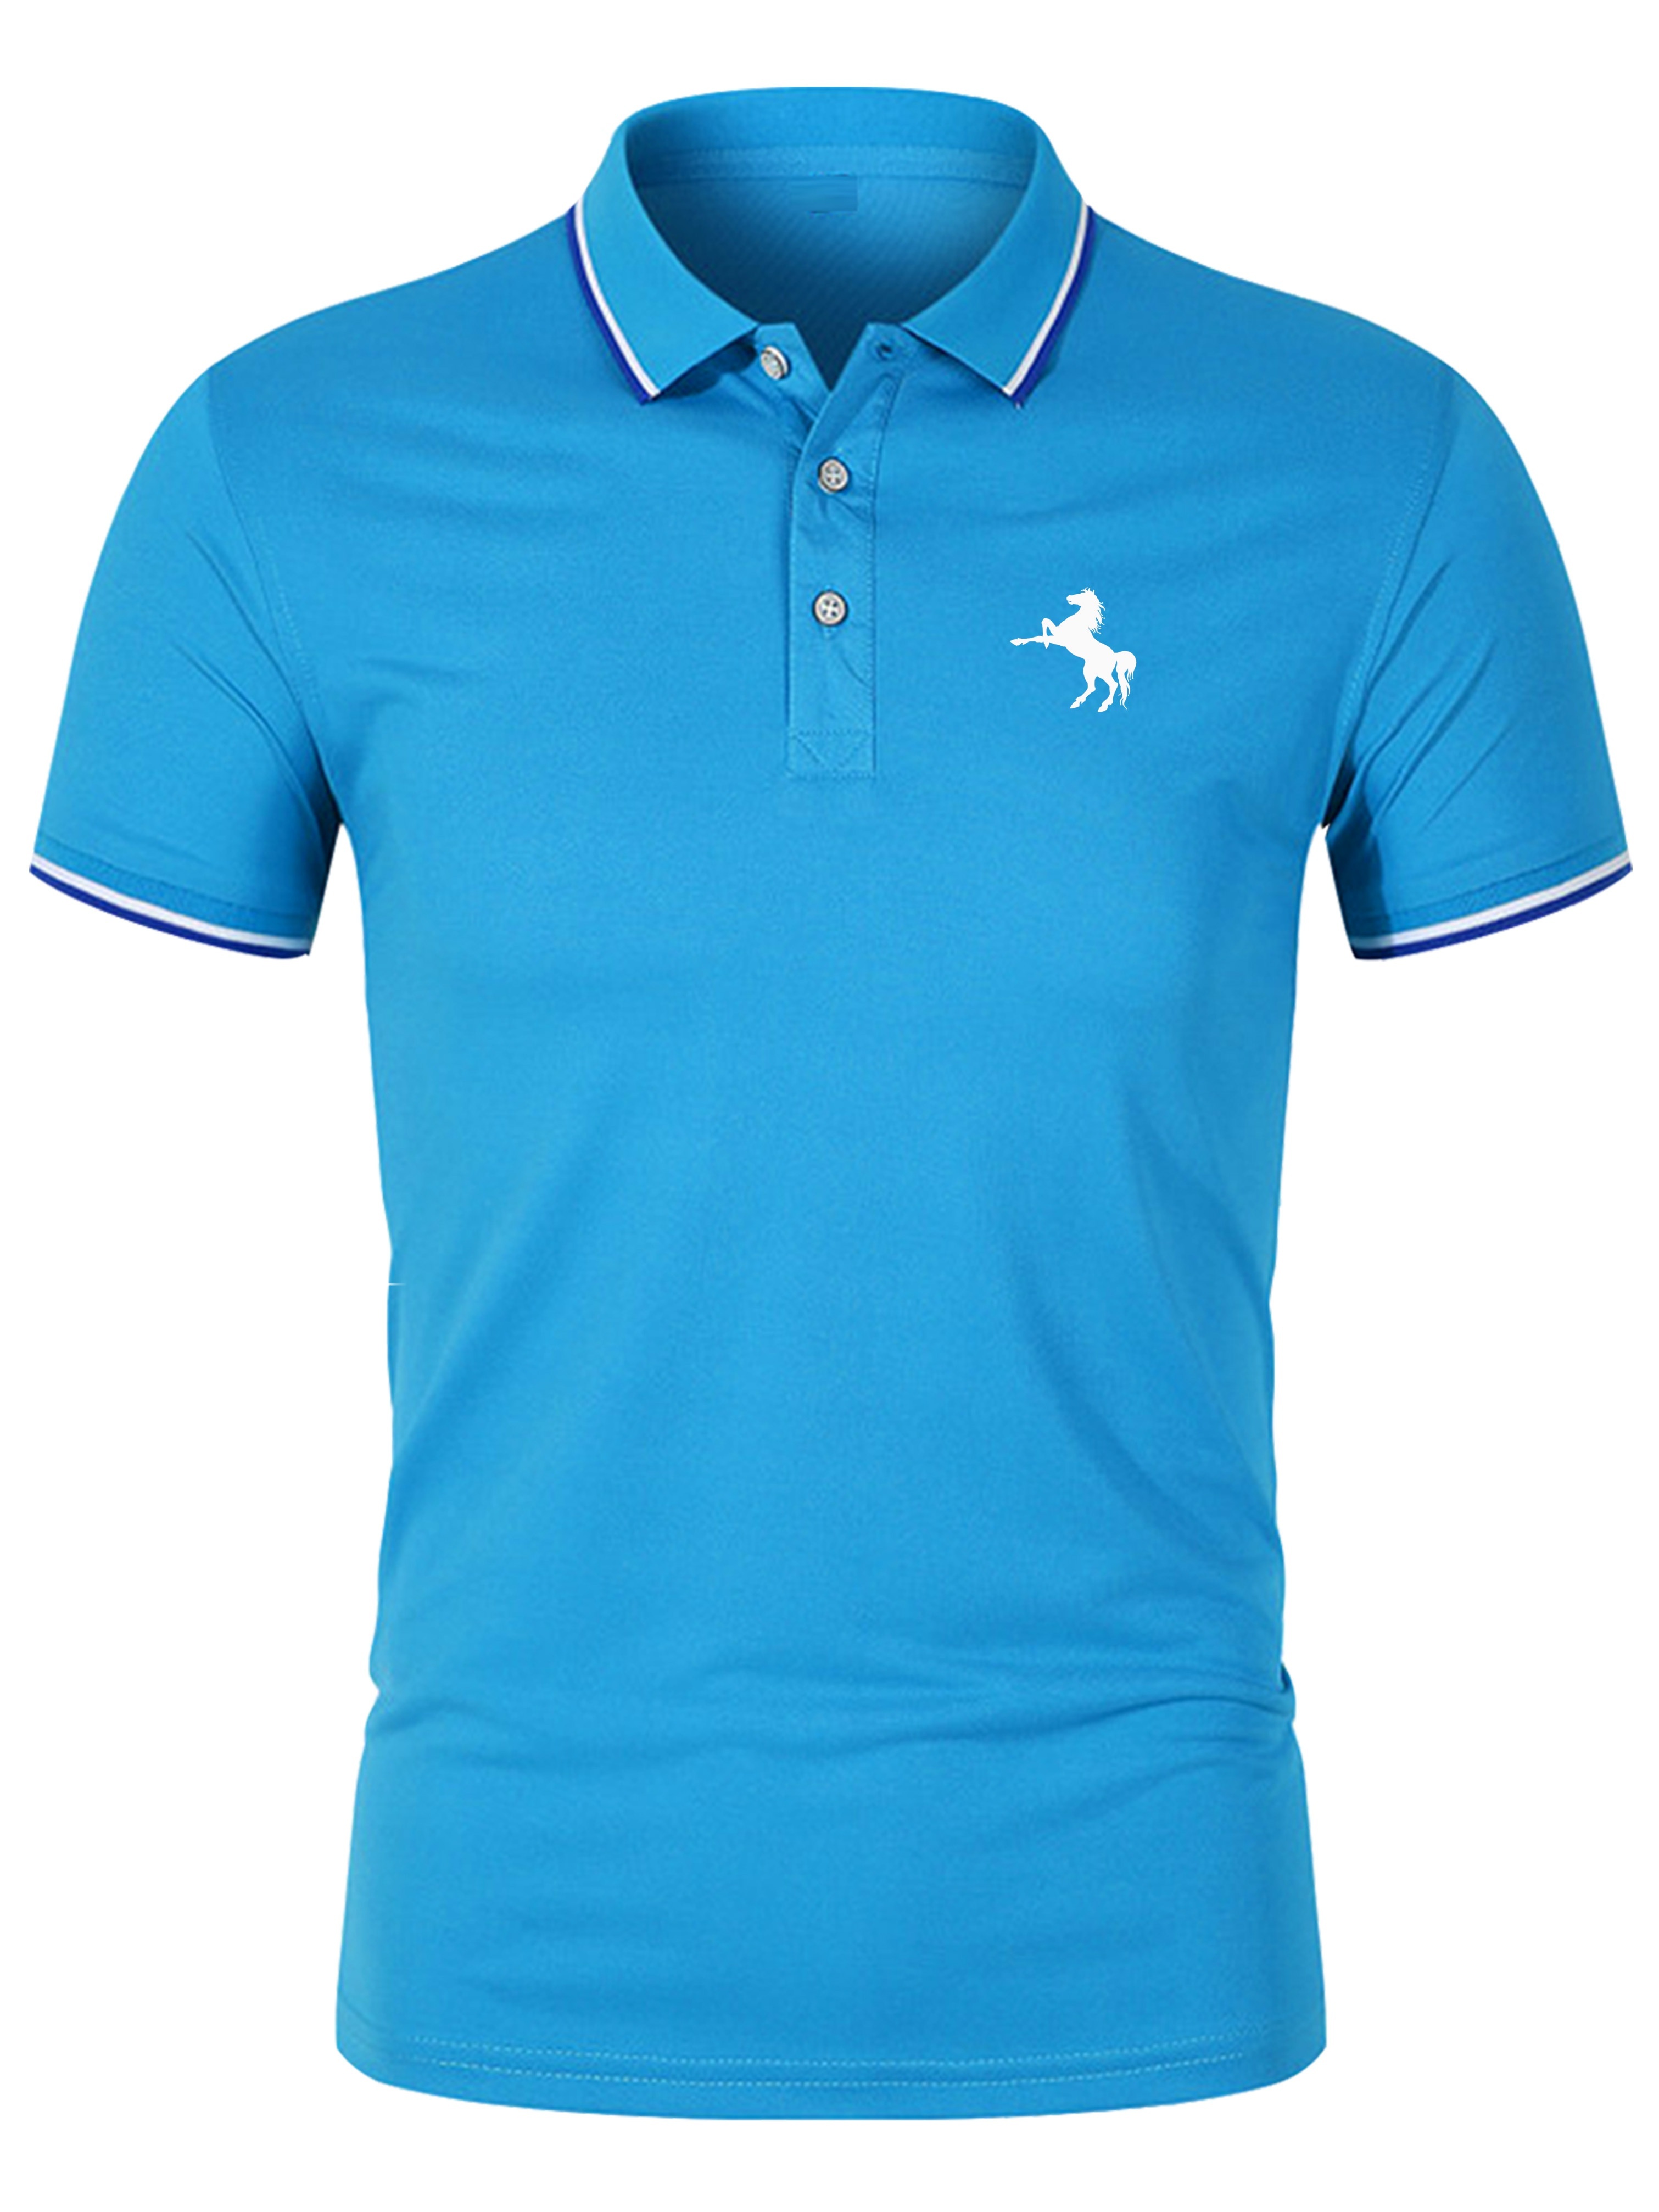 Men's Horse Riding Polo Shirt – Blue - Asphalt blue, Asphalt blue